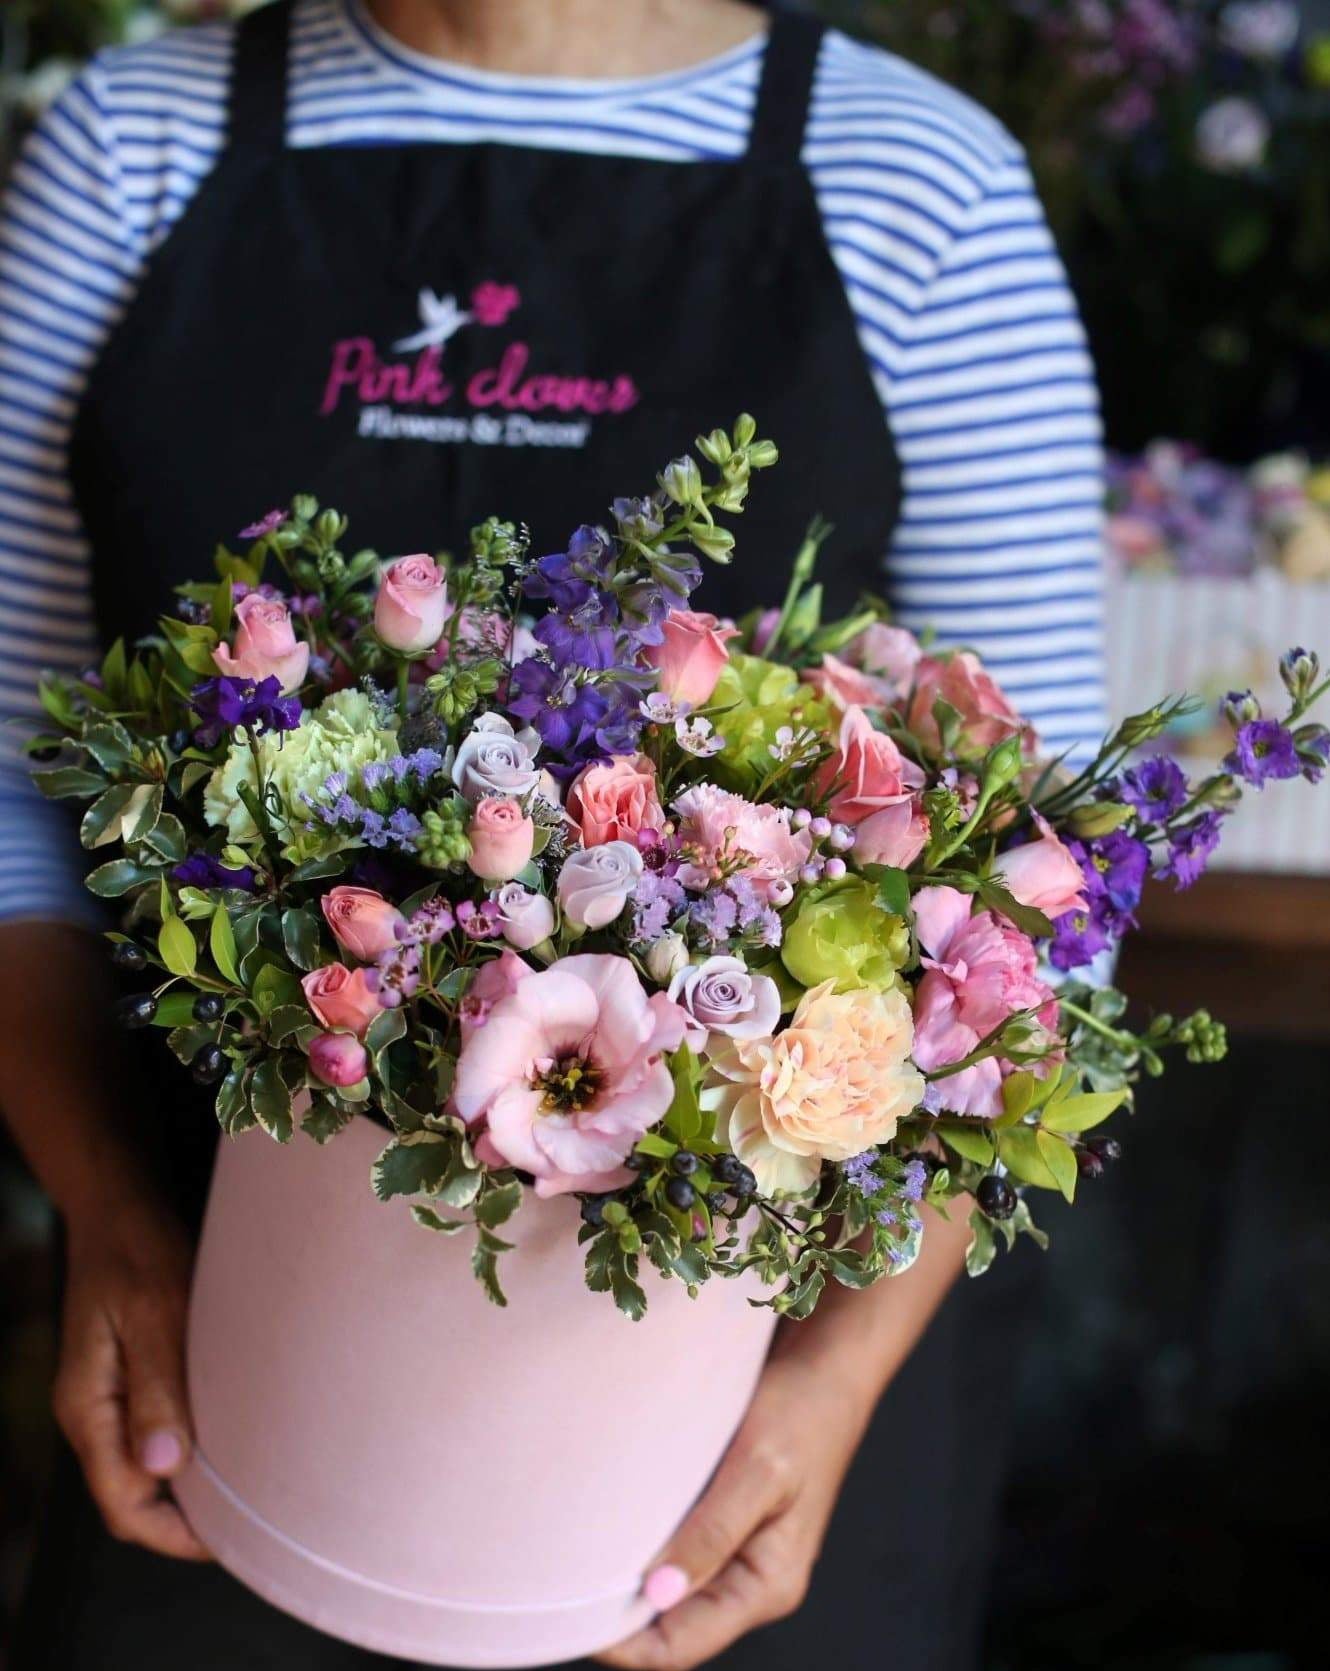 Lori(Arrangement with mix of flowers) - Los Angeles Florist - Pink Clover